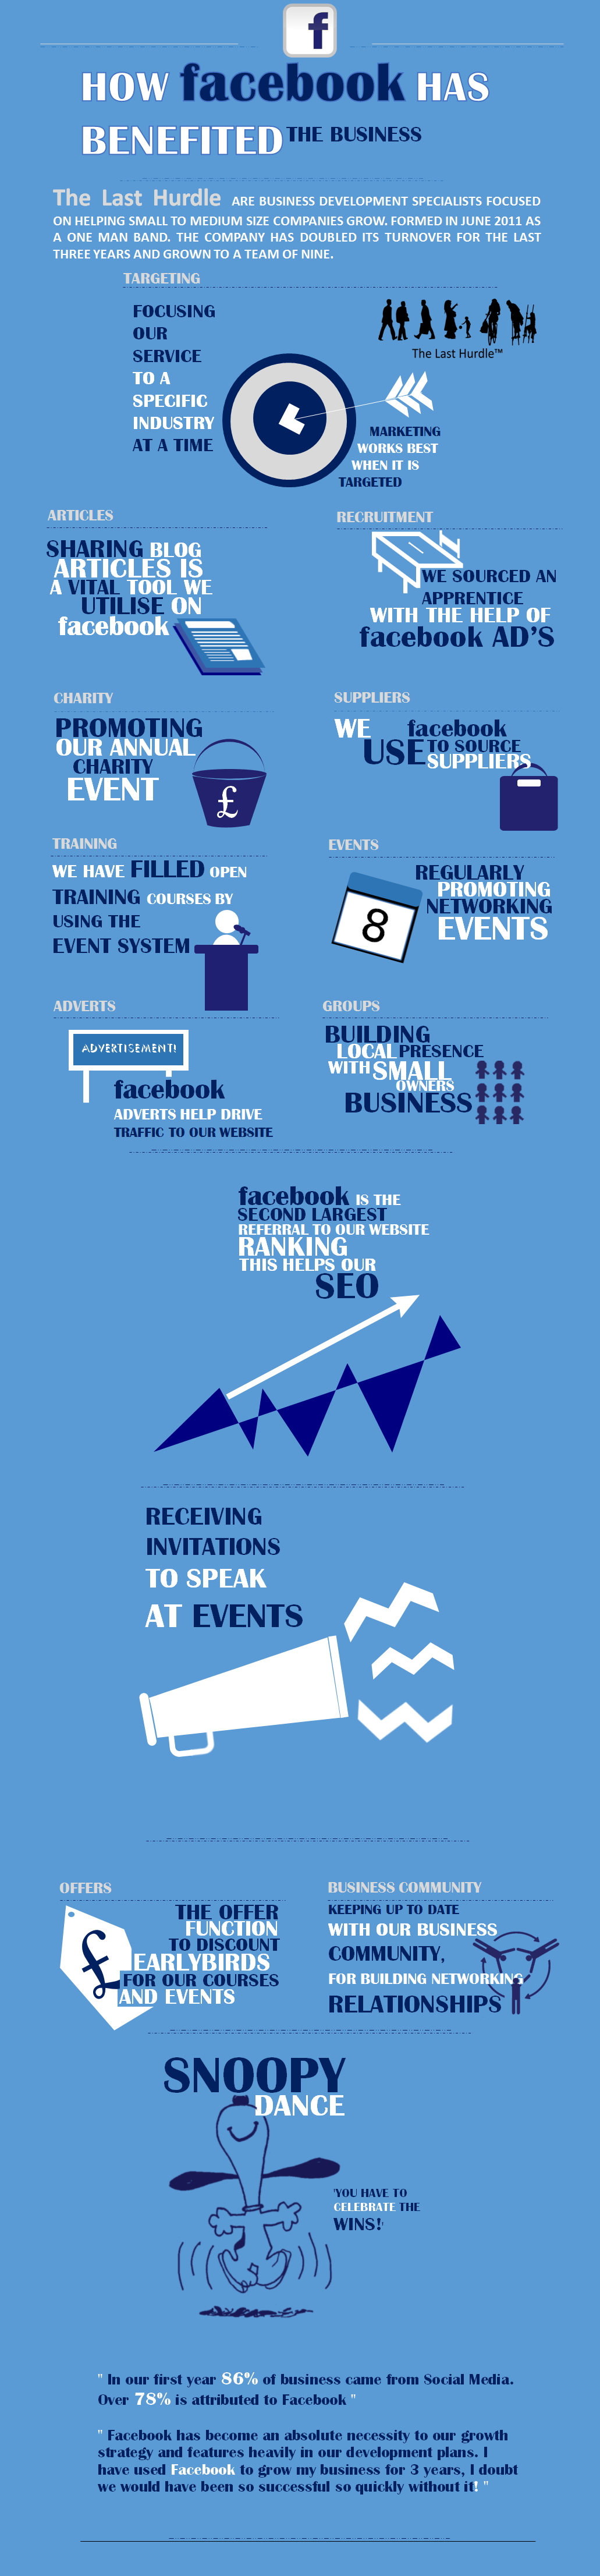 Business Growth Through Facebook